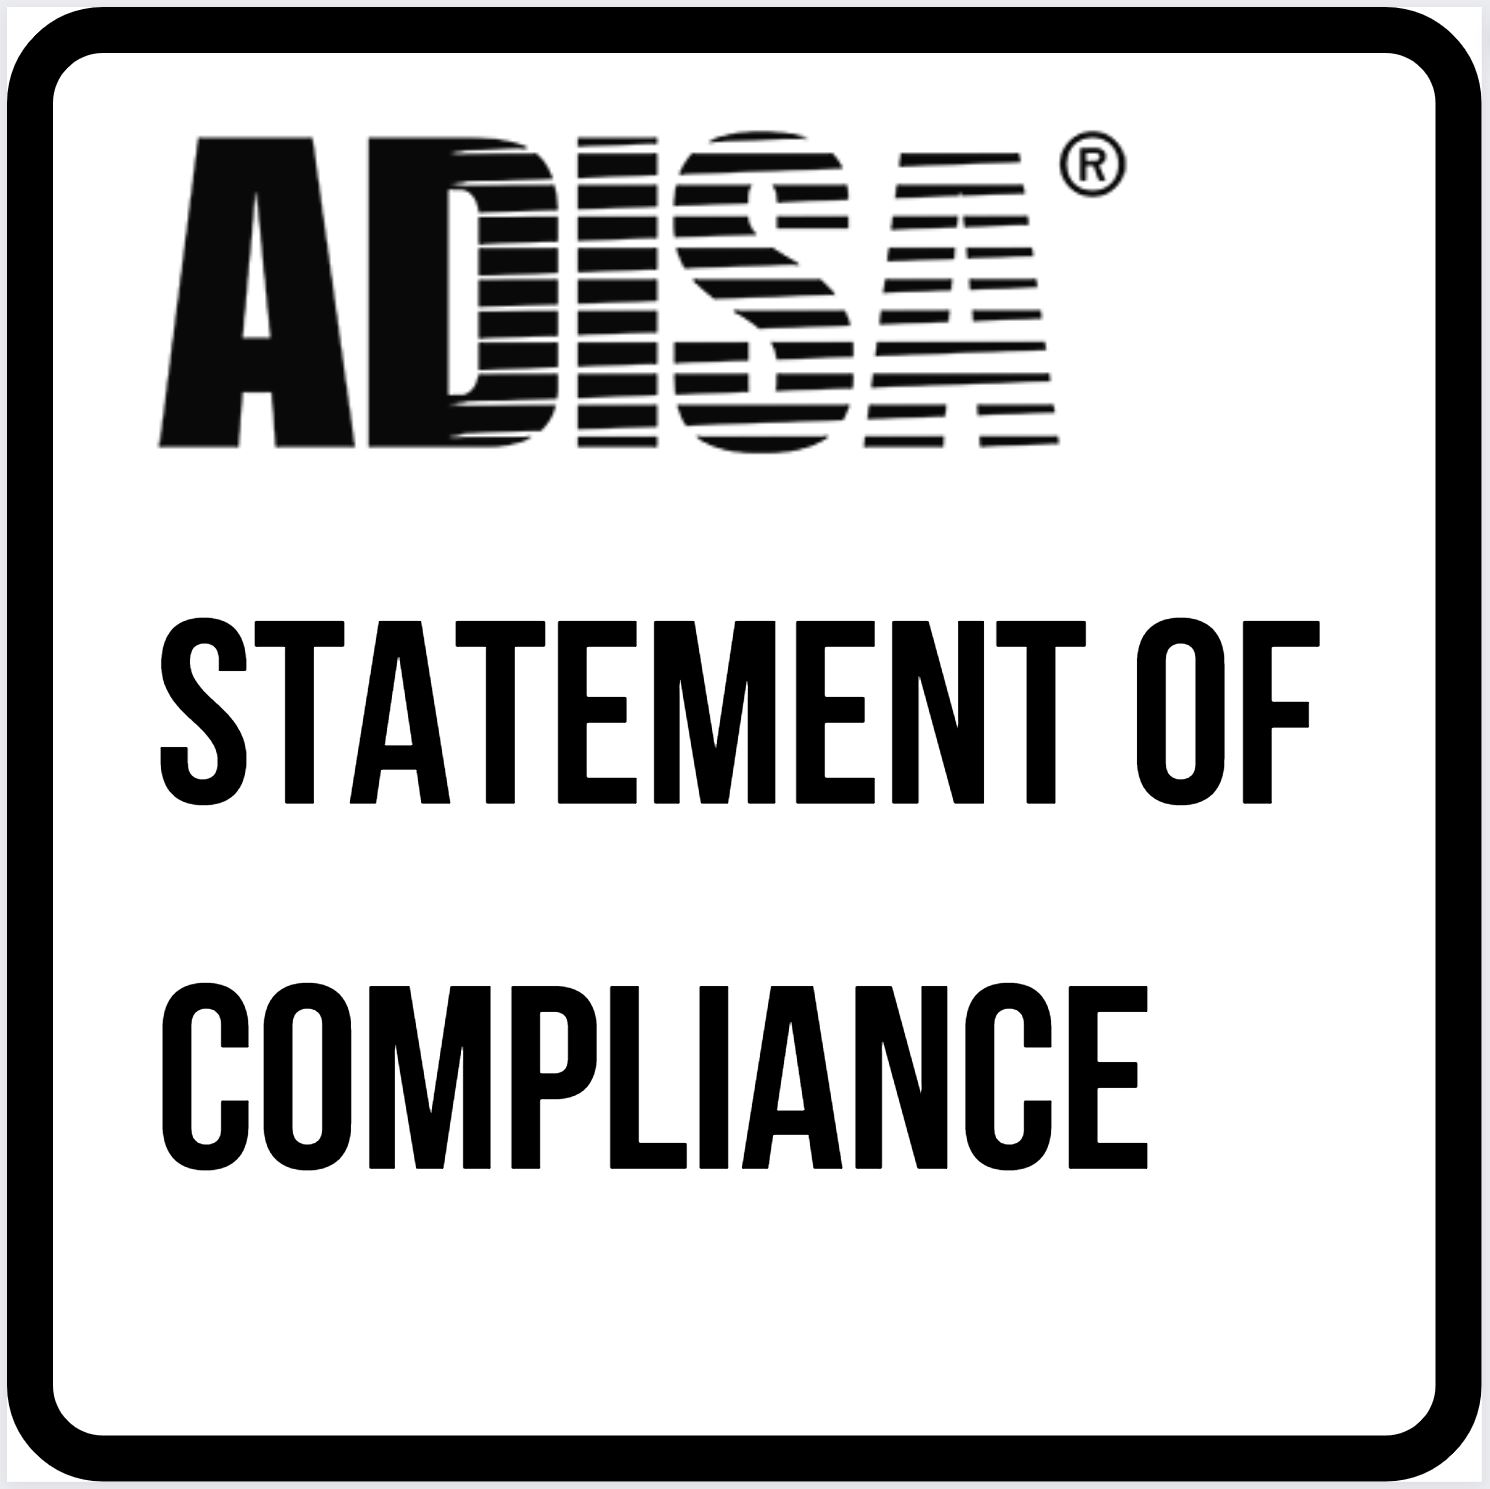 ADISA Standard 8.0 – Statement of Compliance Template.